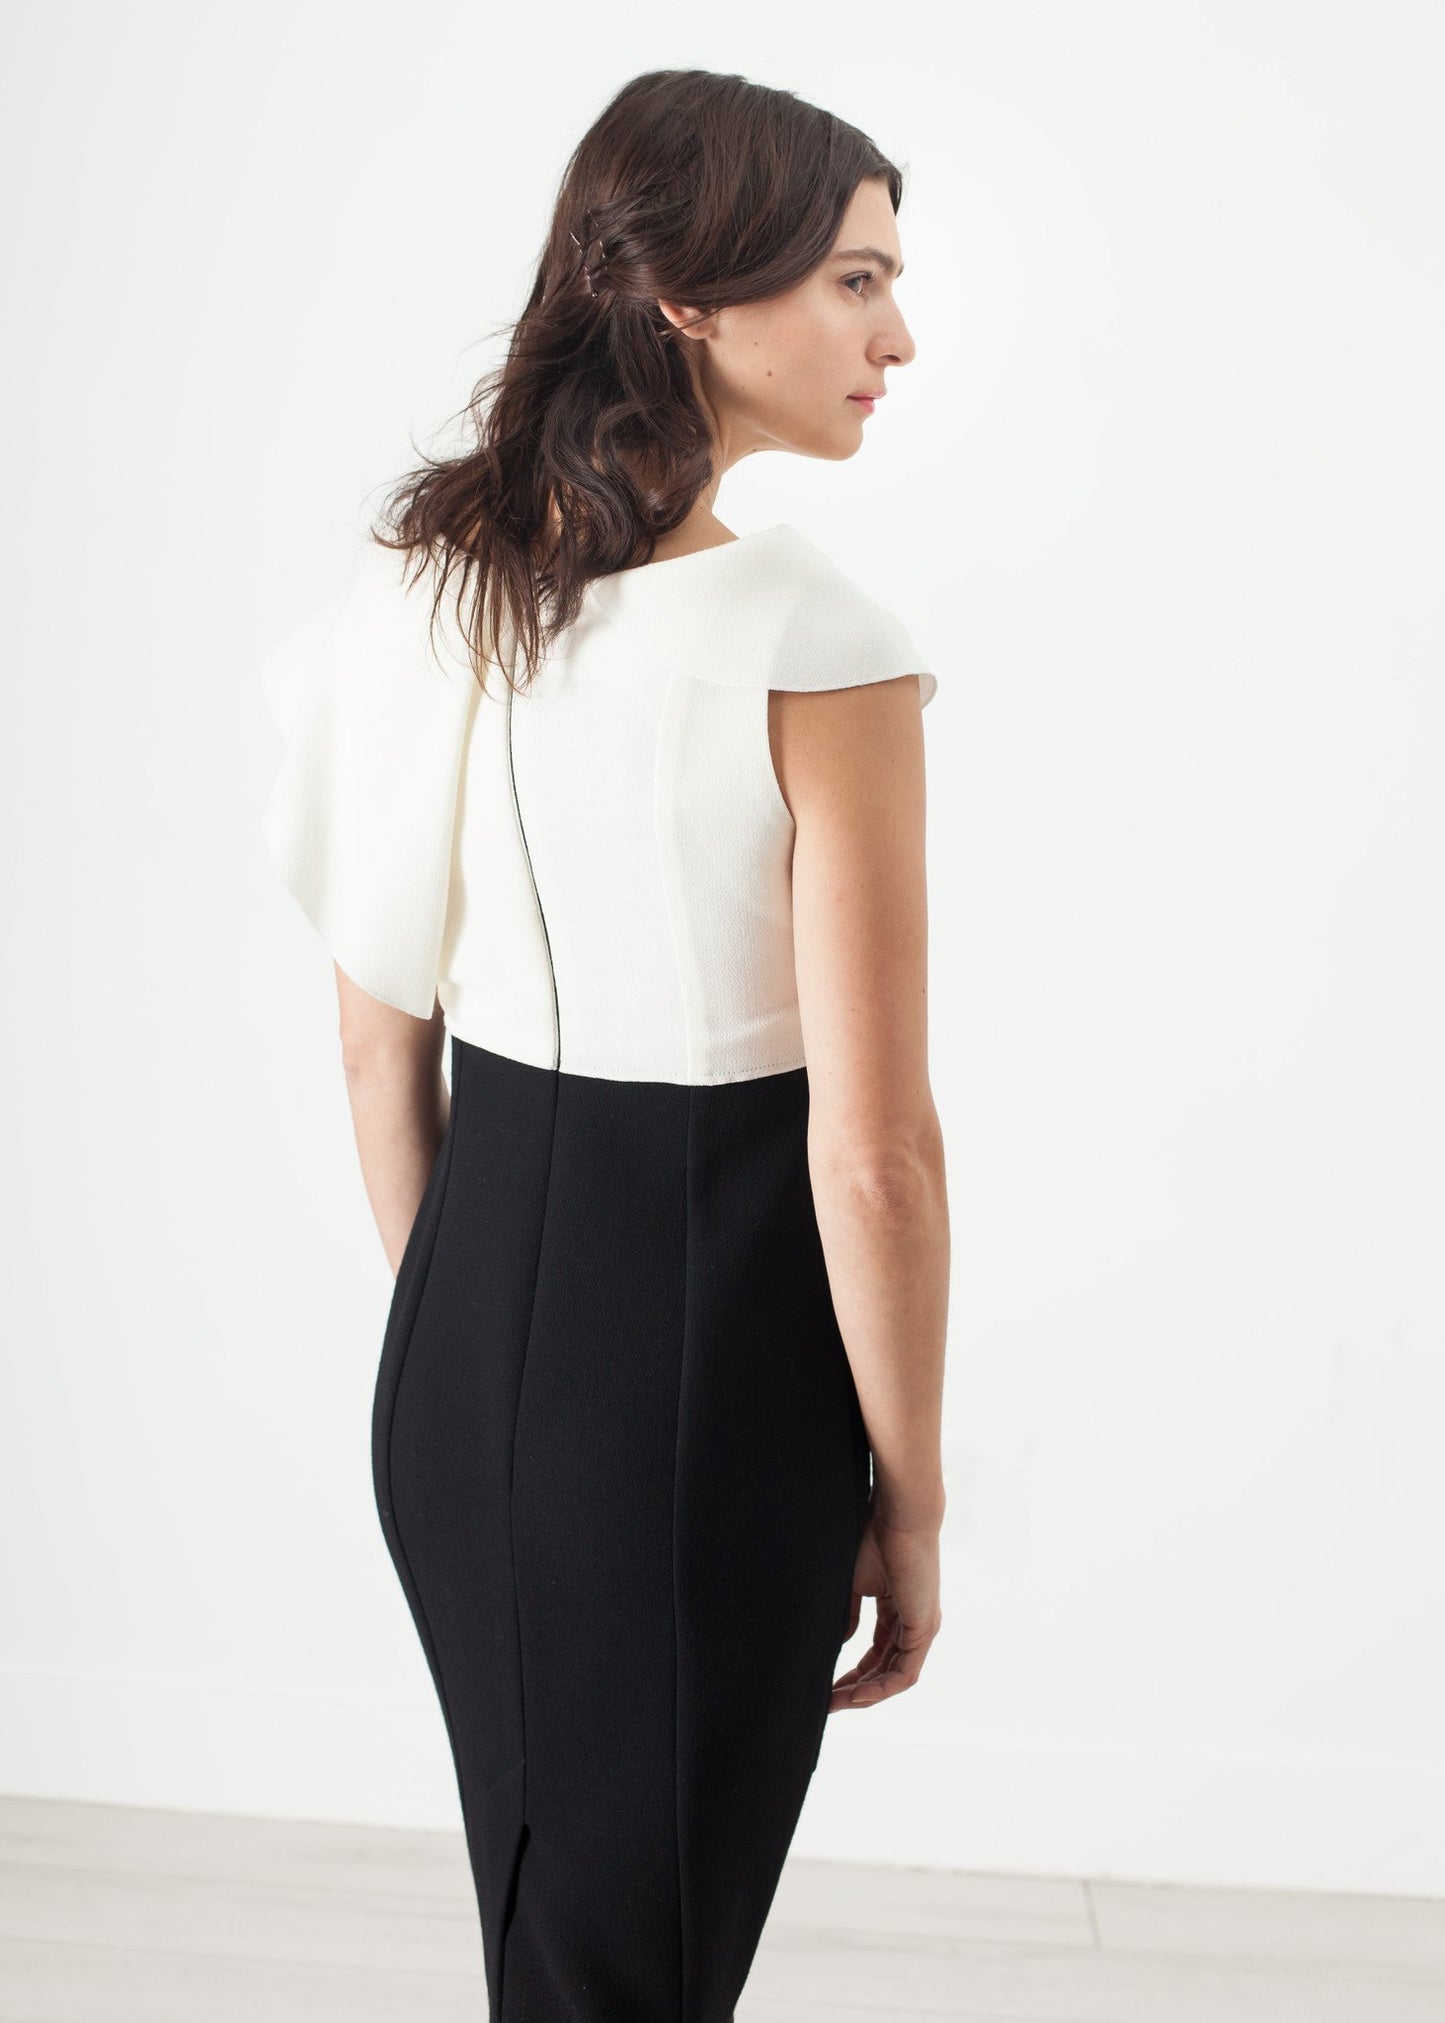 Asymmetric Dress in Cream/Black